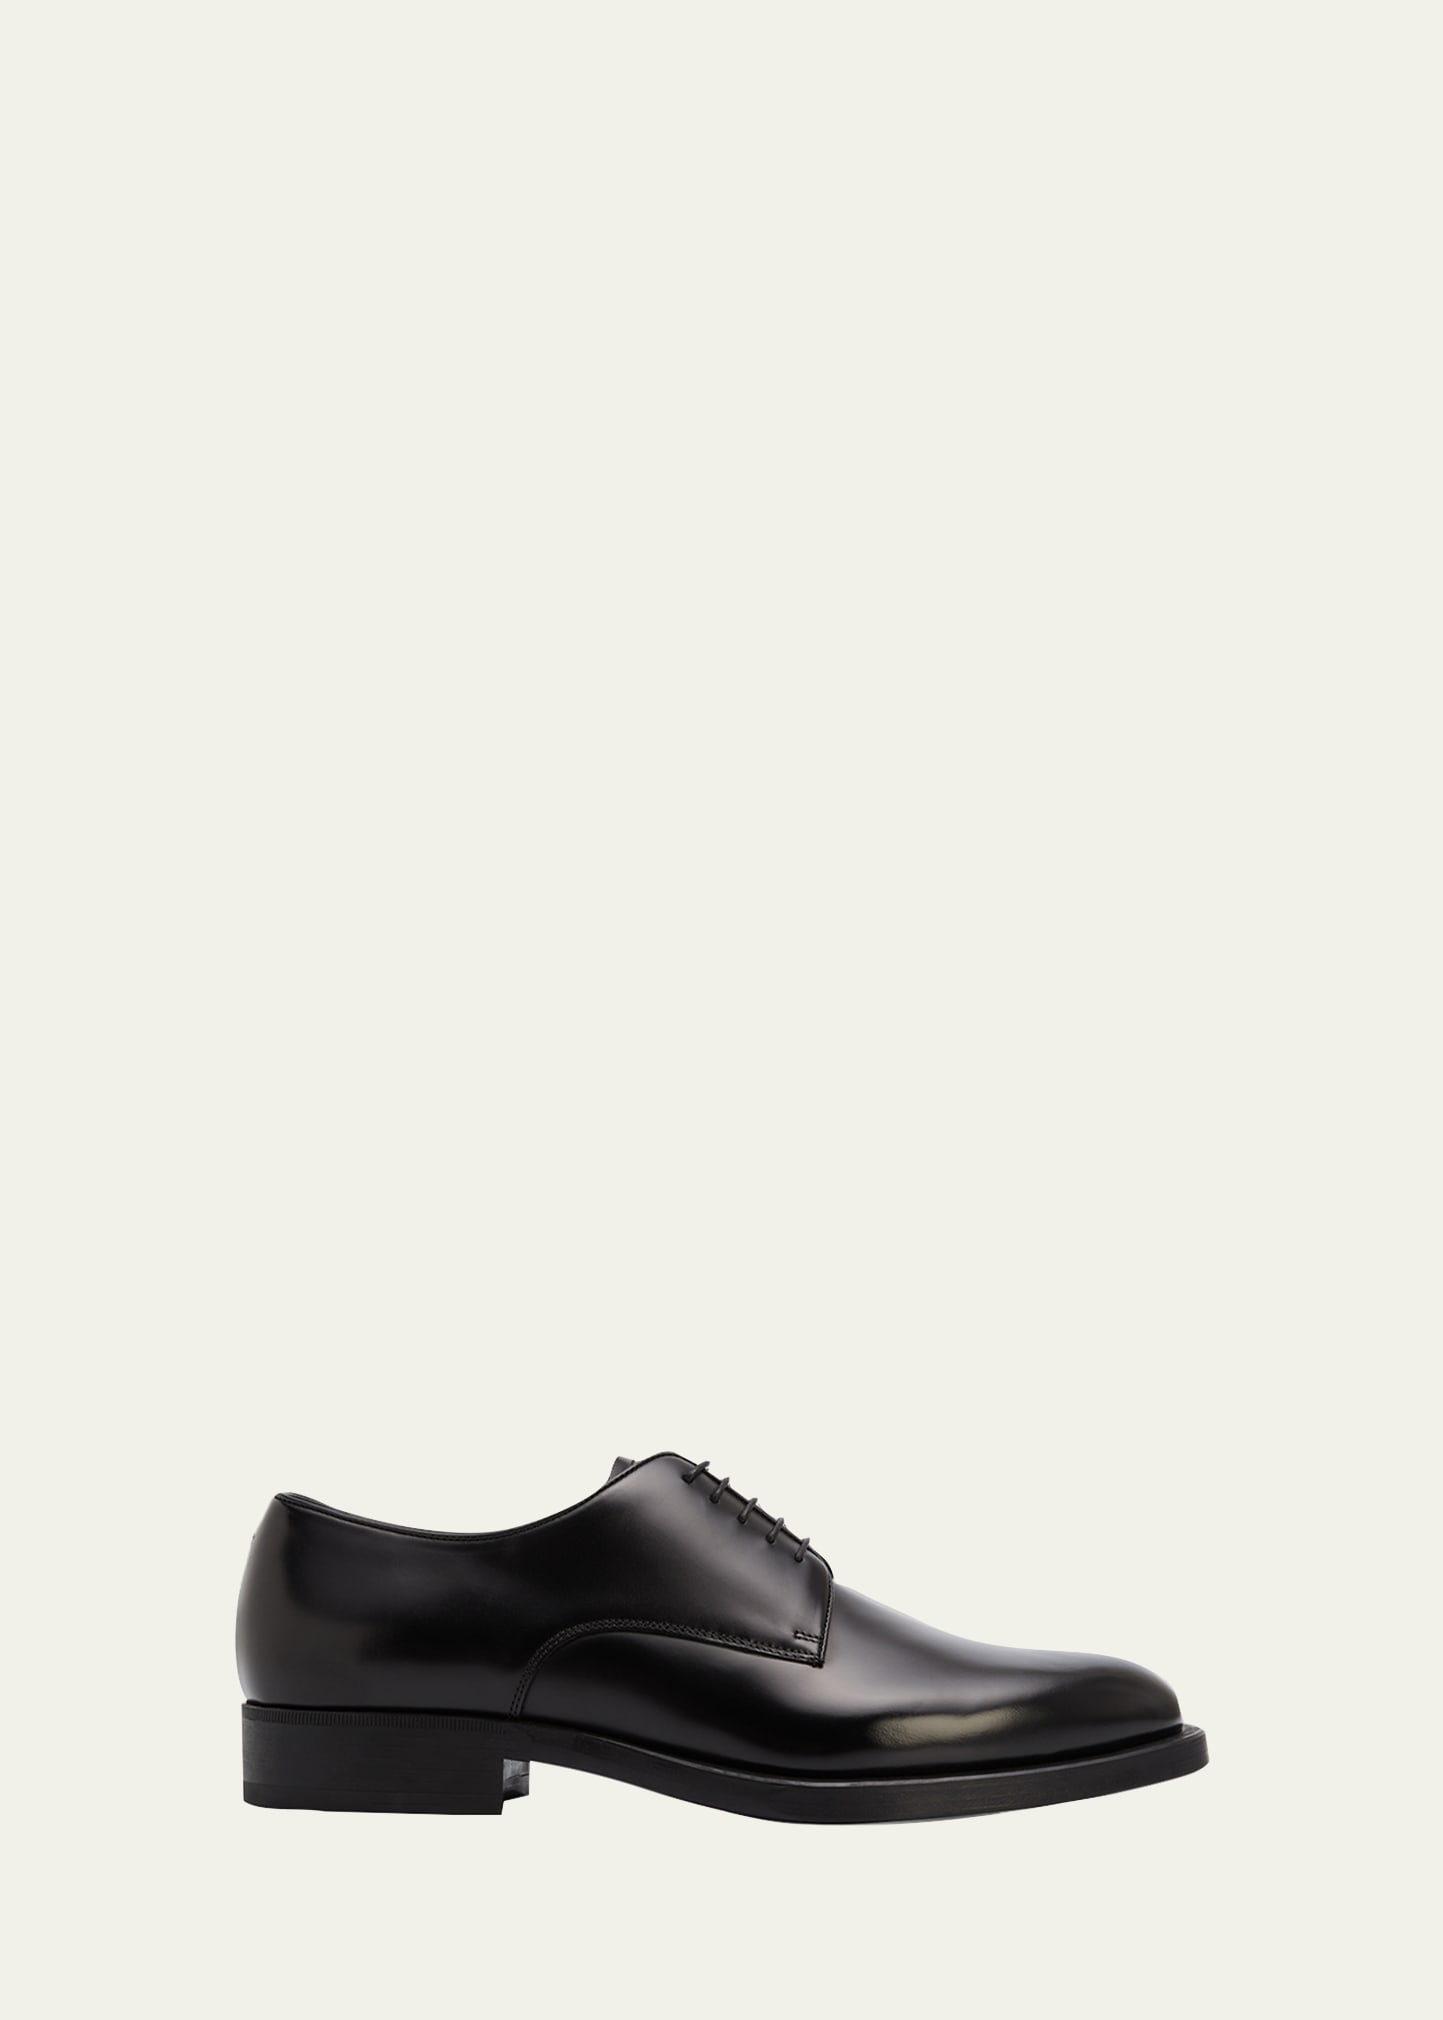 Men's Formal Leather Derby Shoes